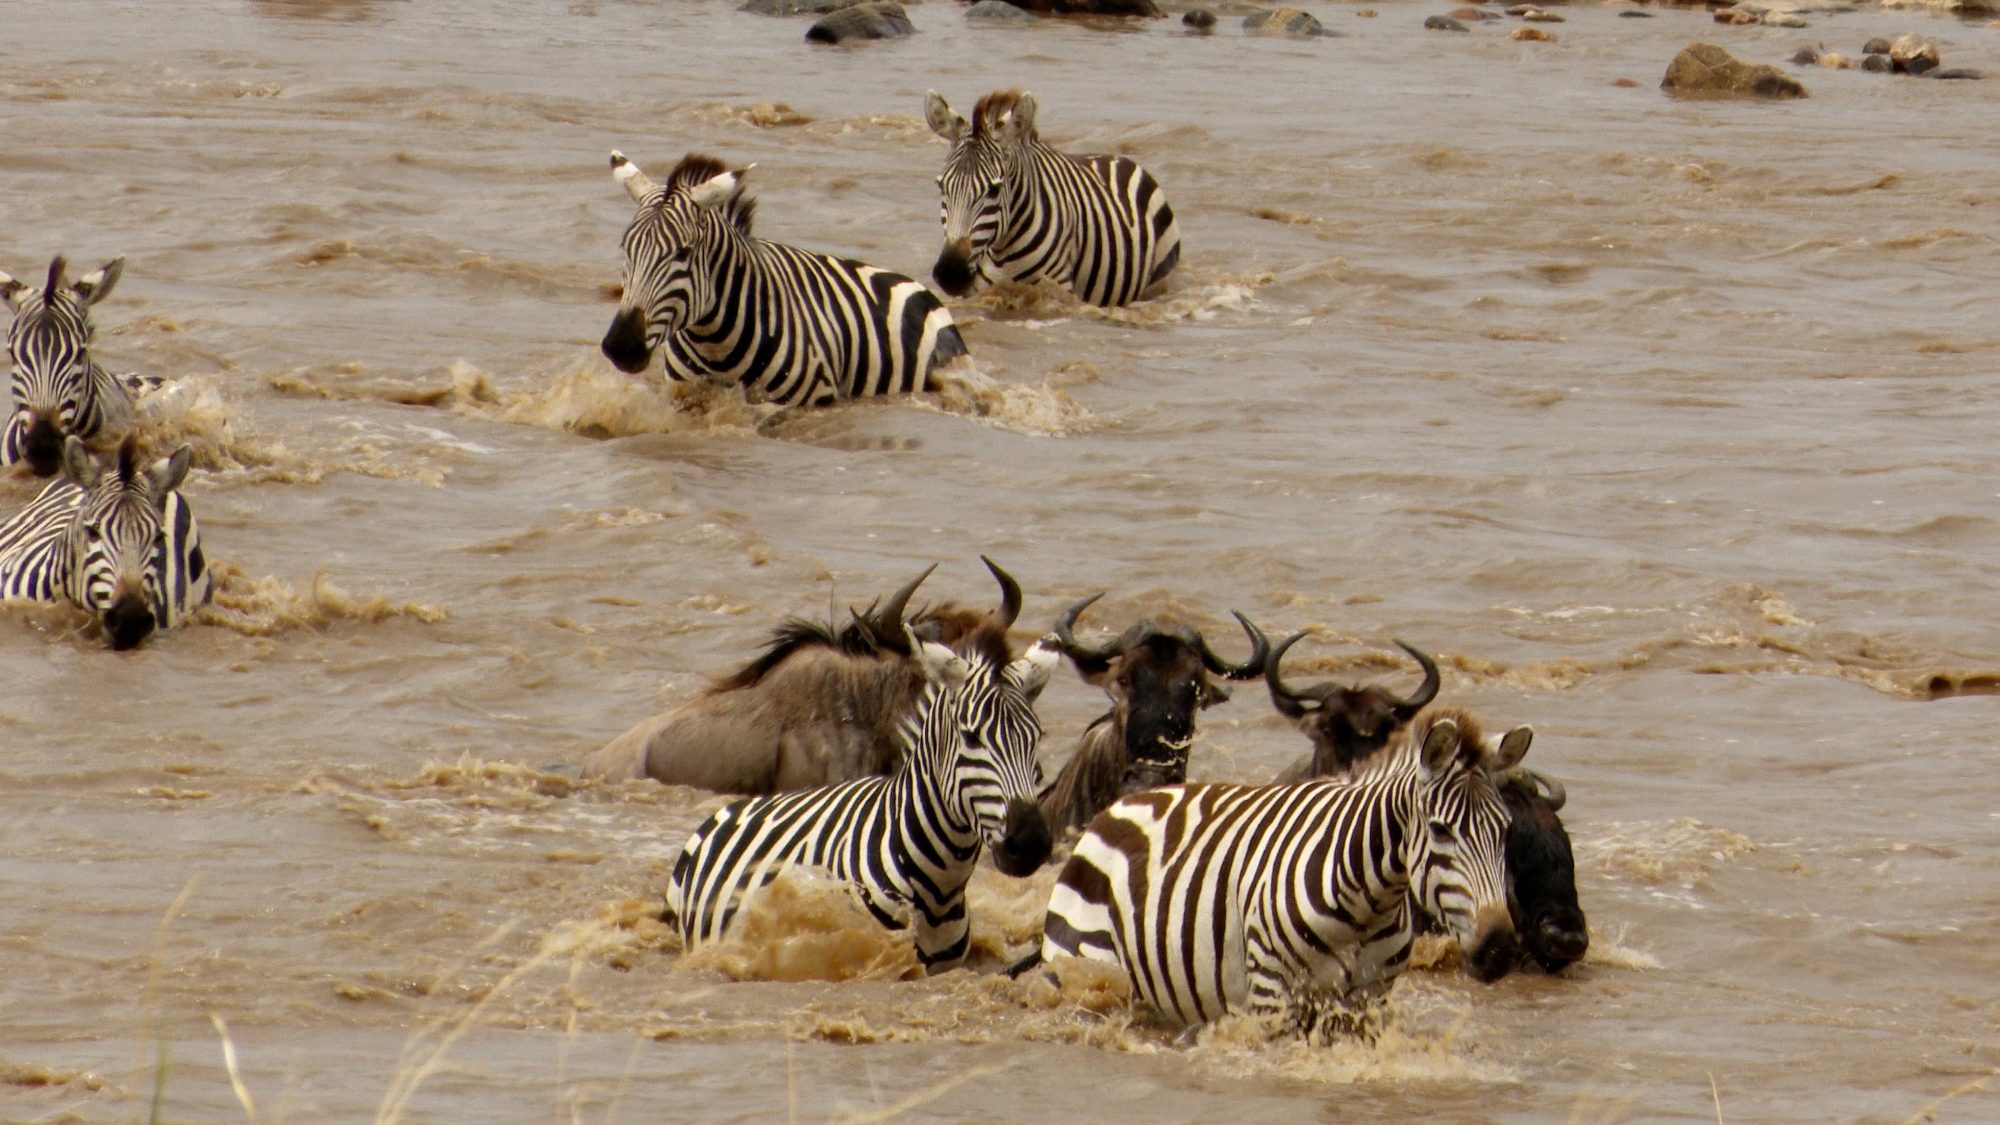 Zebra cross the Mara River during the great migration – Tanzania, 2019